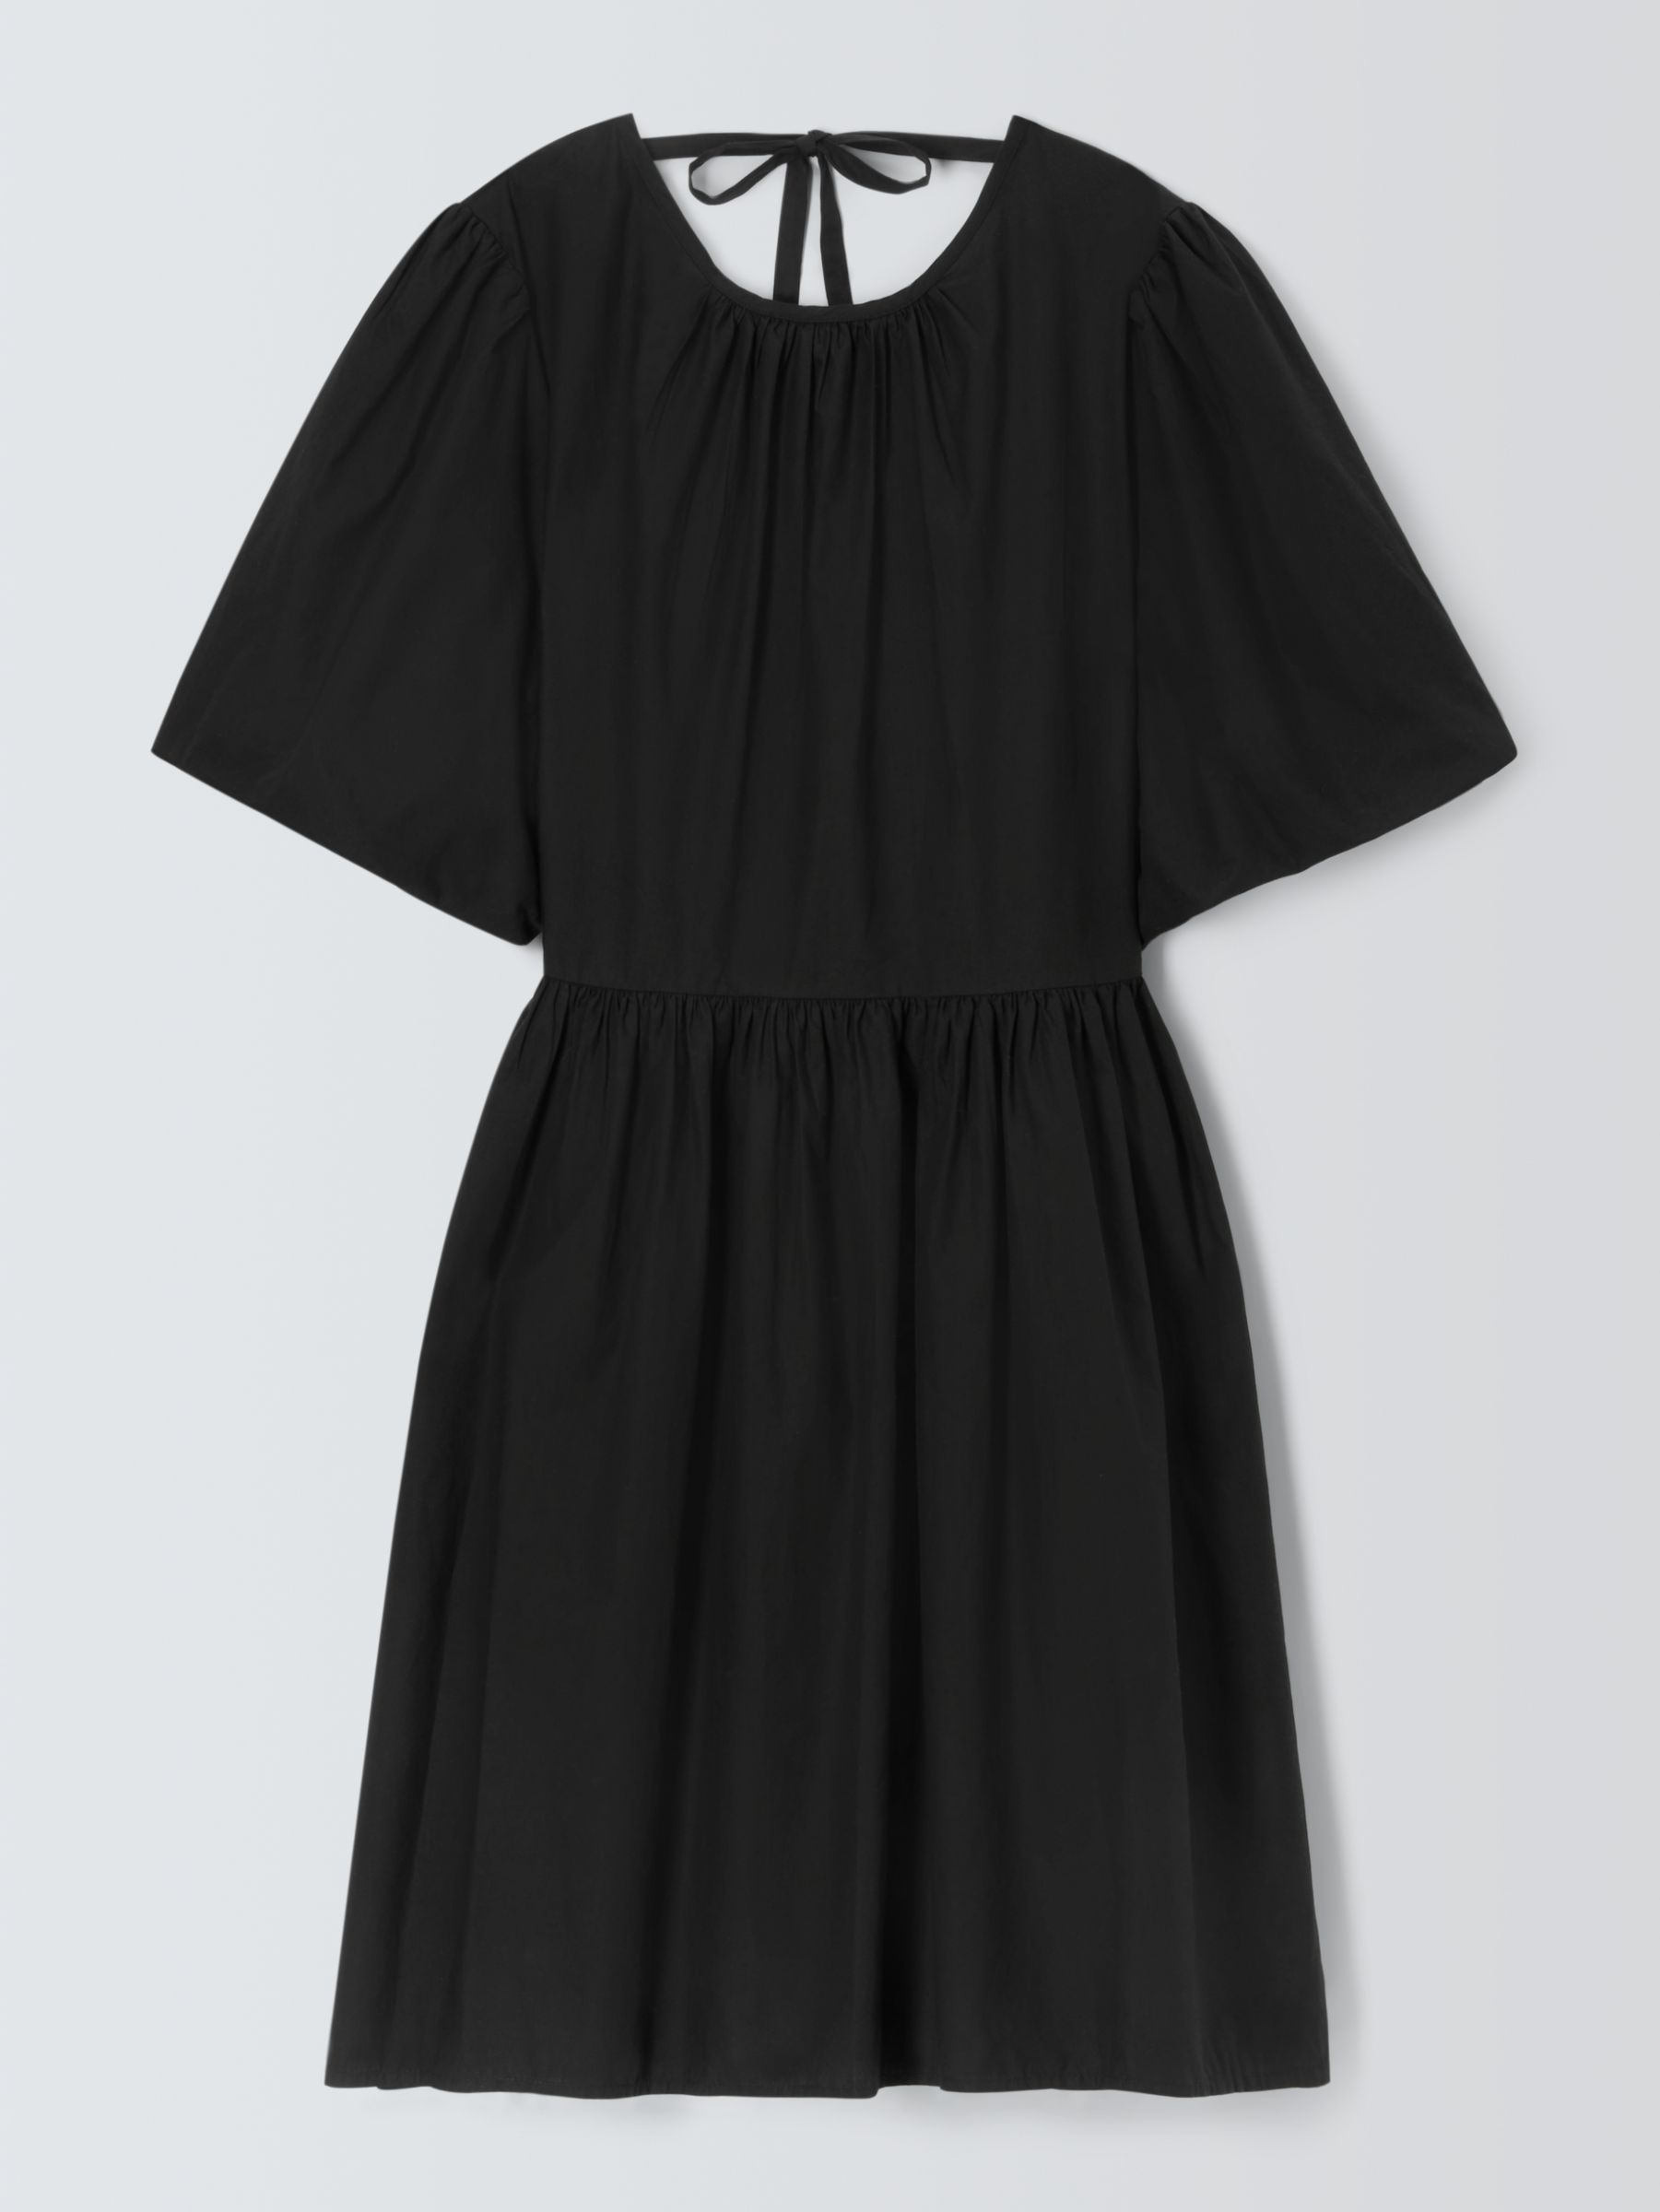 John Lewis ANYDAY Volume Mini Dress, Black, 6